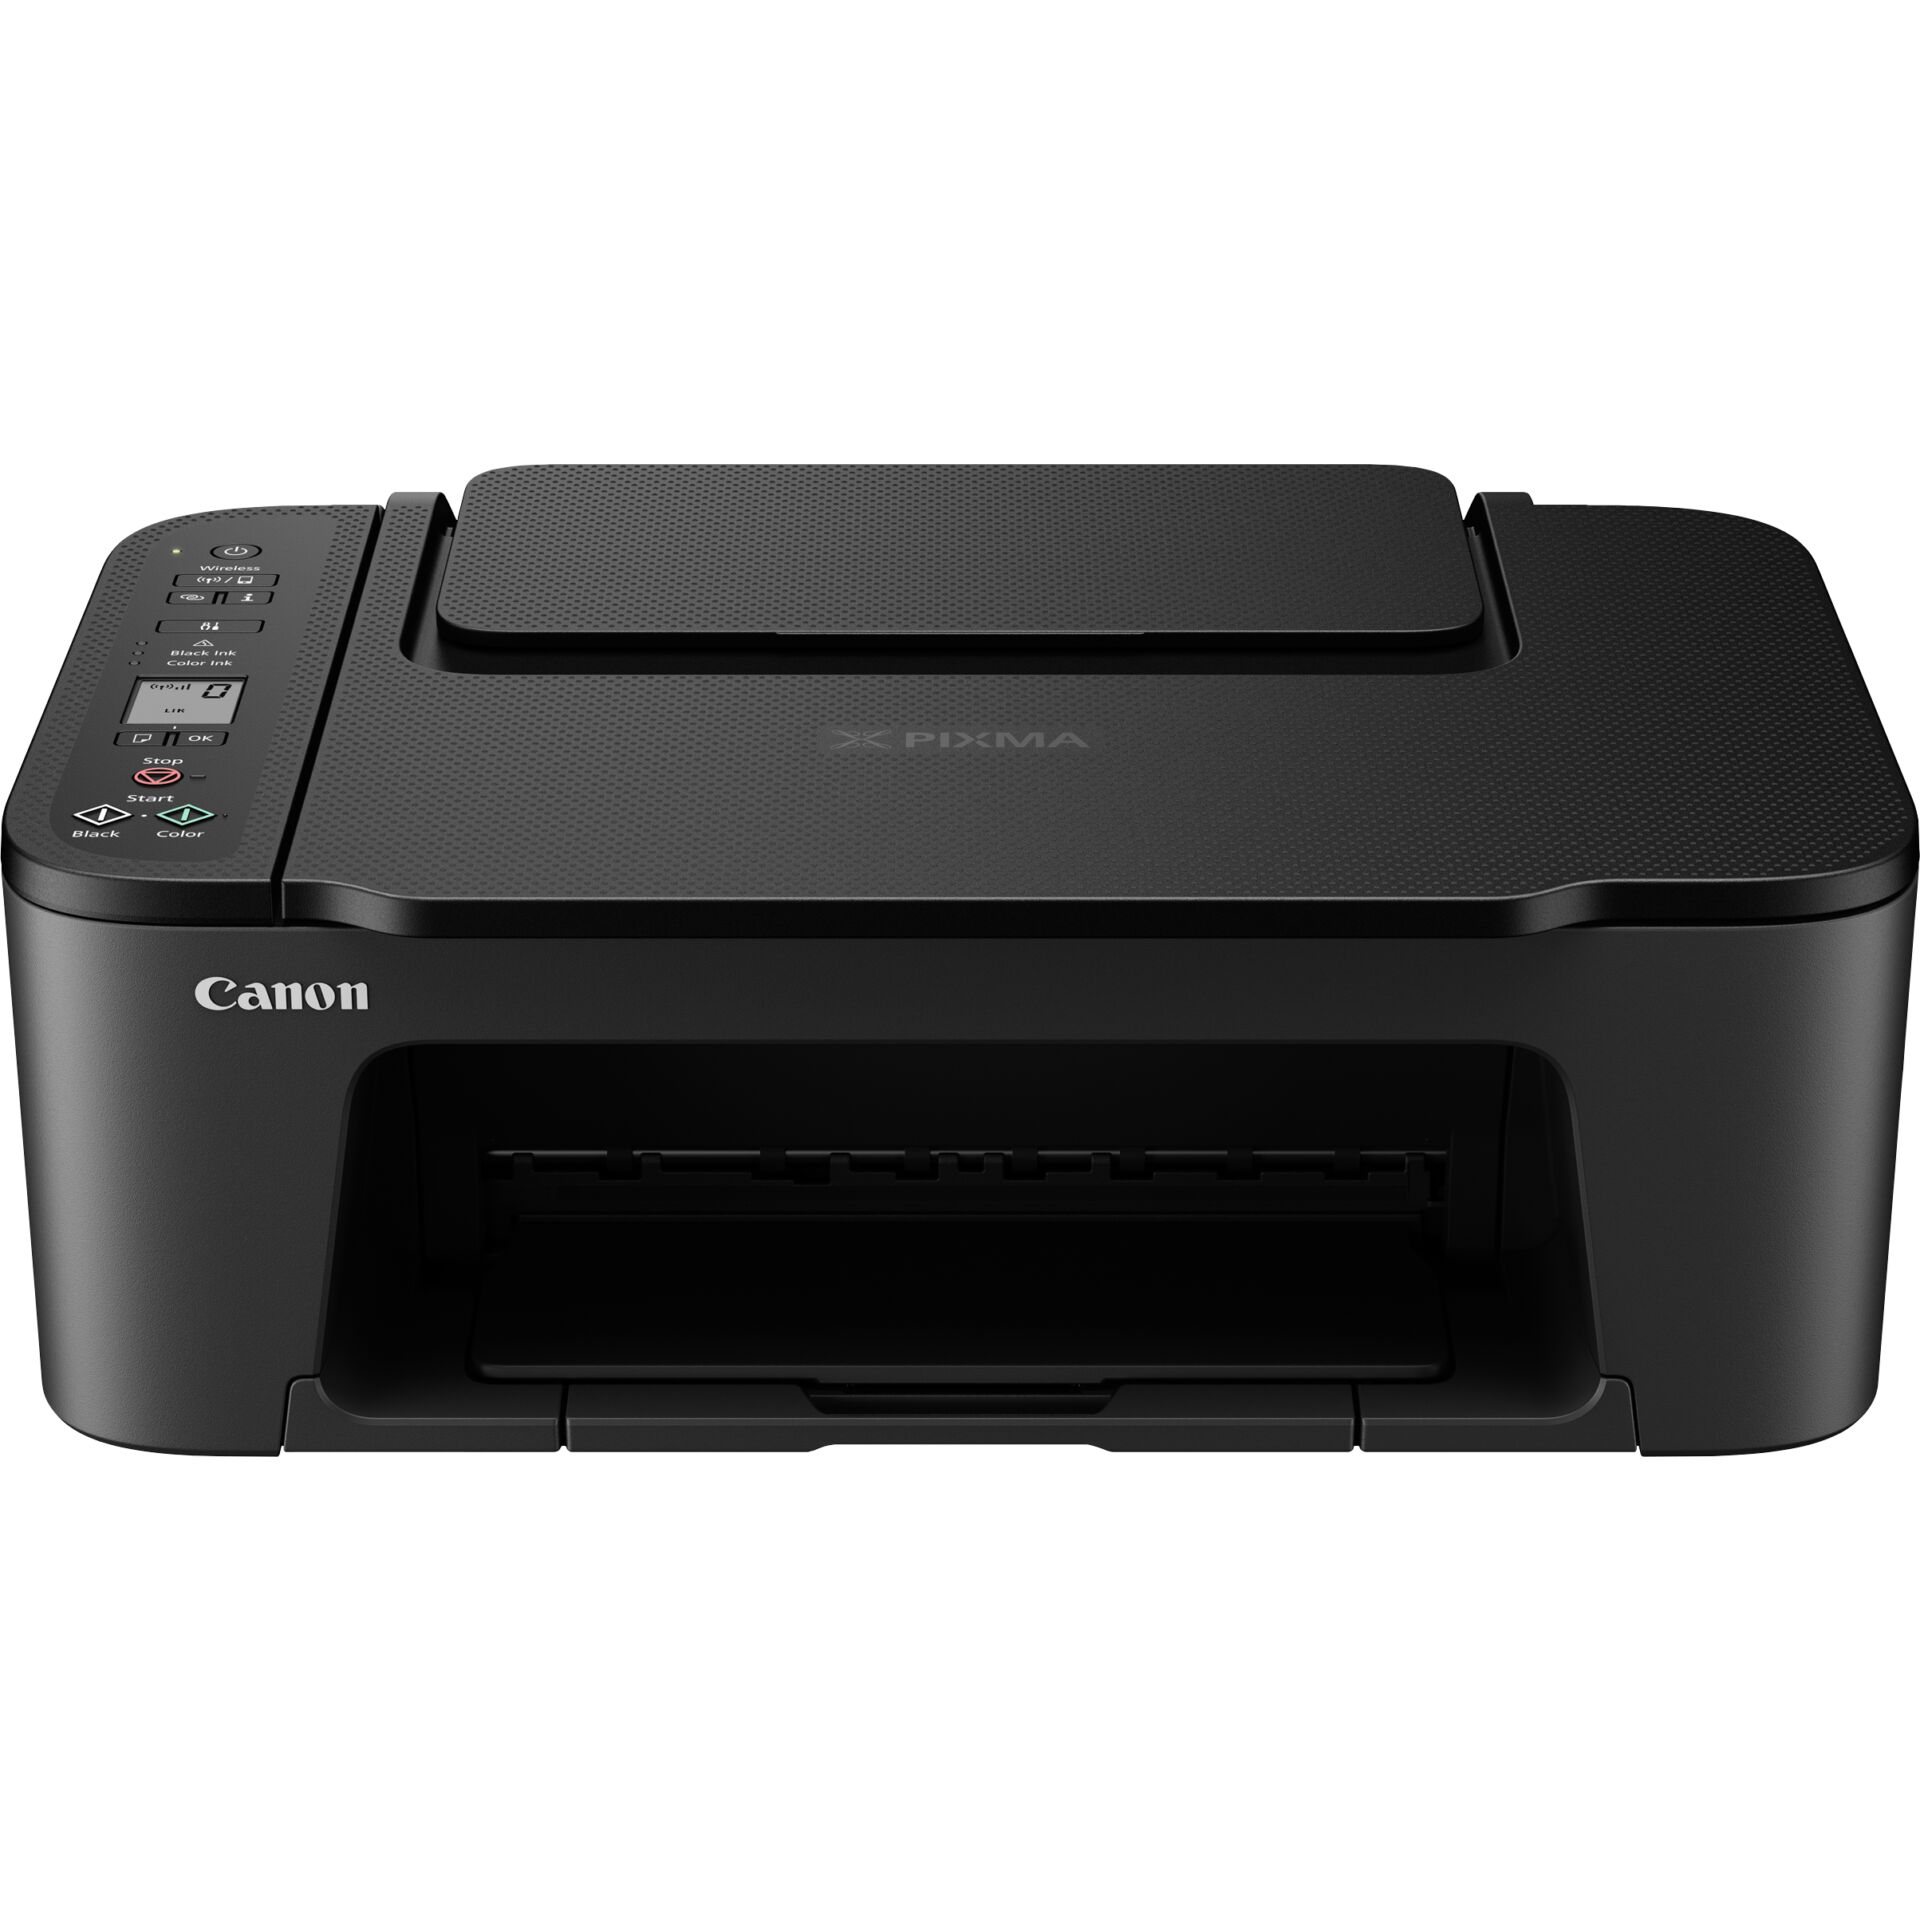 Canon PIXMA TS3450 schwarz, WLAN, Tinte, mehrfarbig-Multifunktionsgerät, Drucker/Scanner/Kopierer